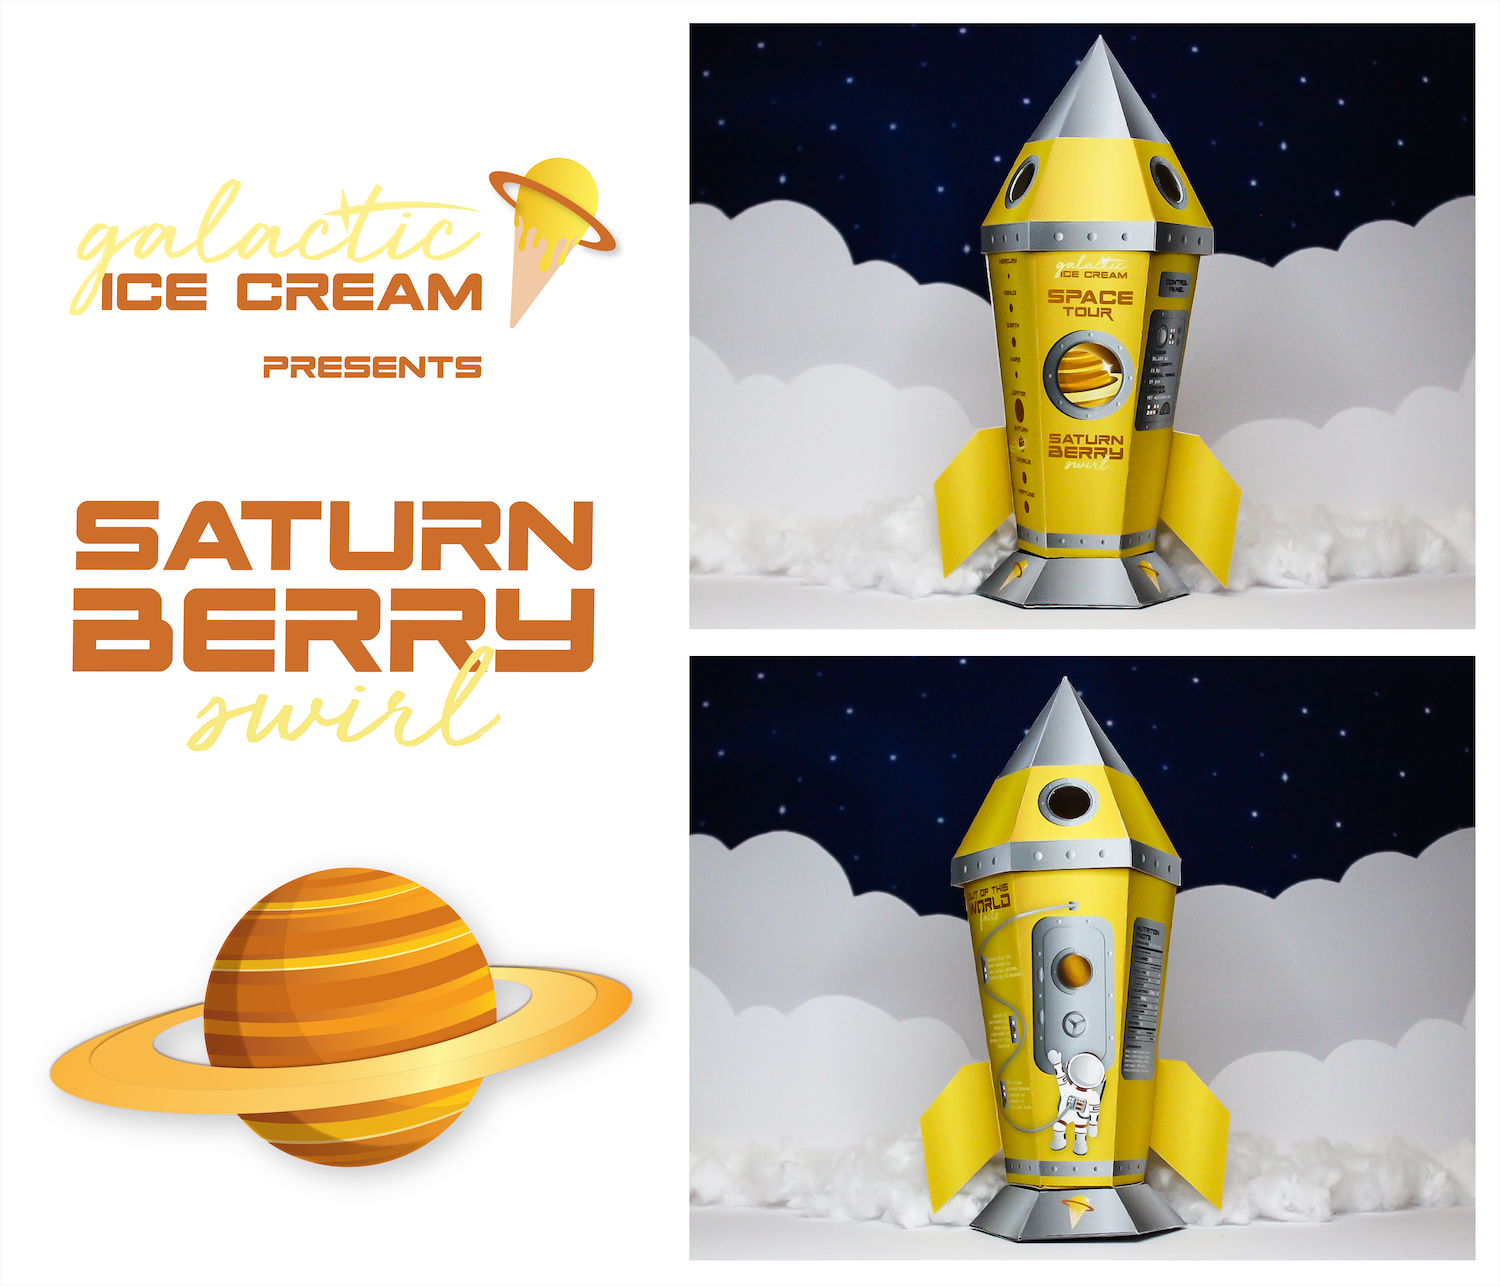 Saturn—Yellow Rocket Ice Cream Packaging